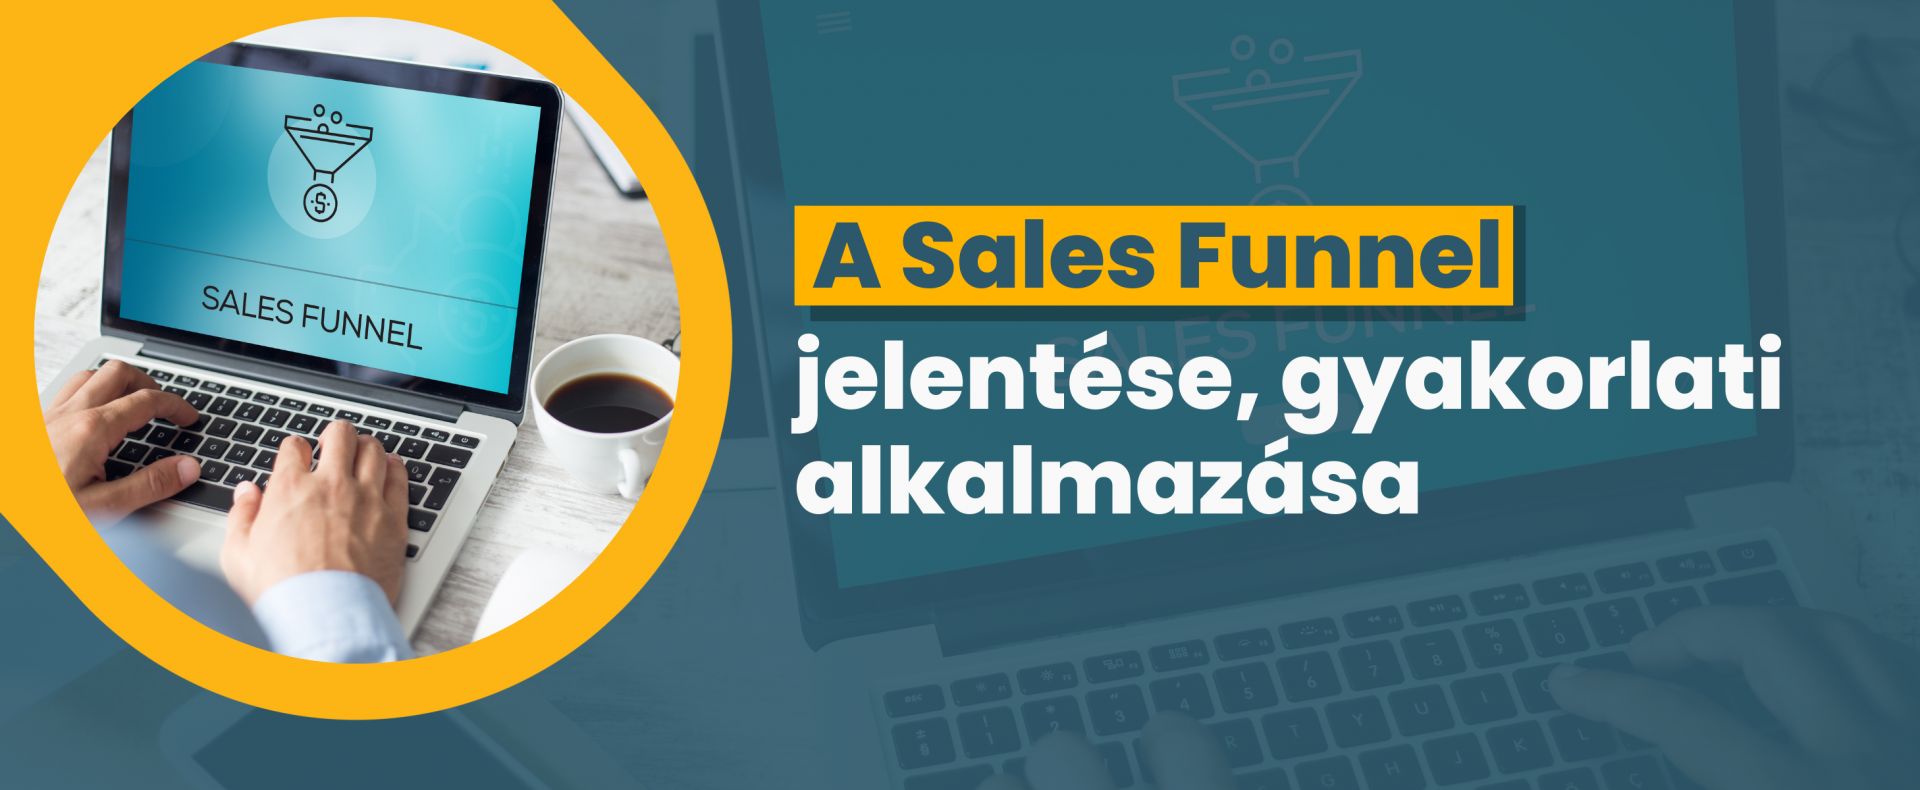 A Sales Funnel jelentése röviden